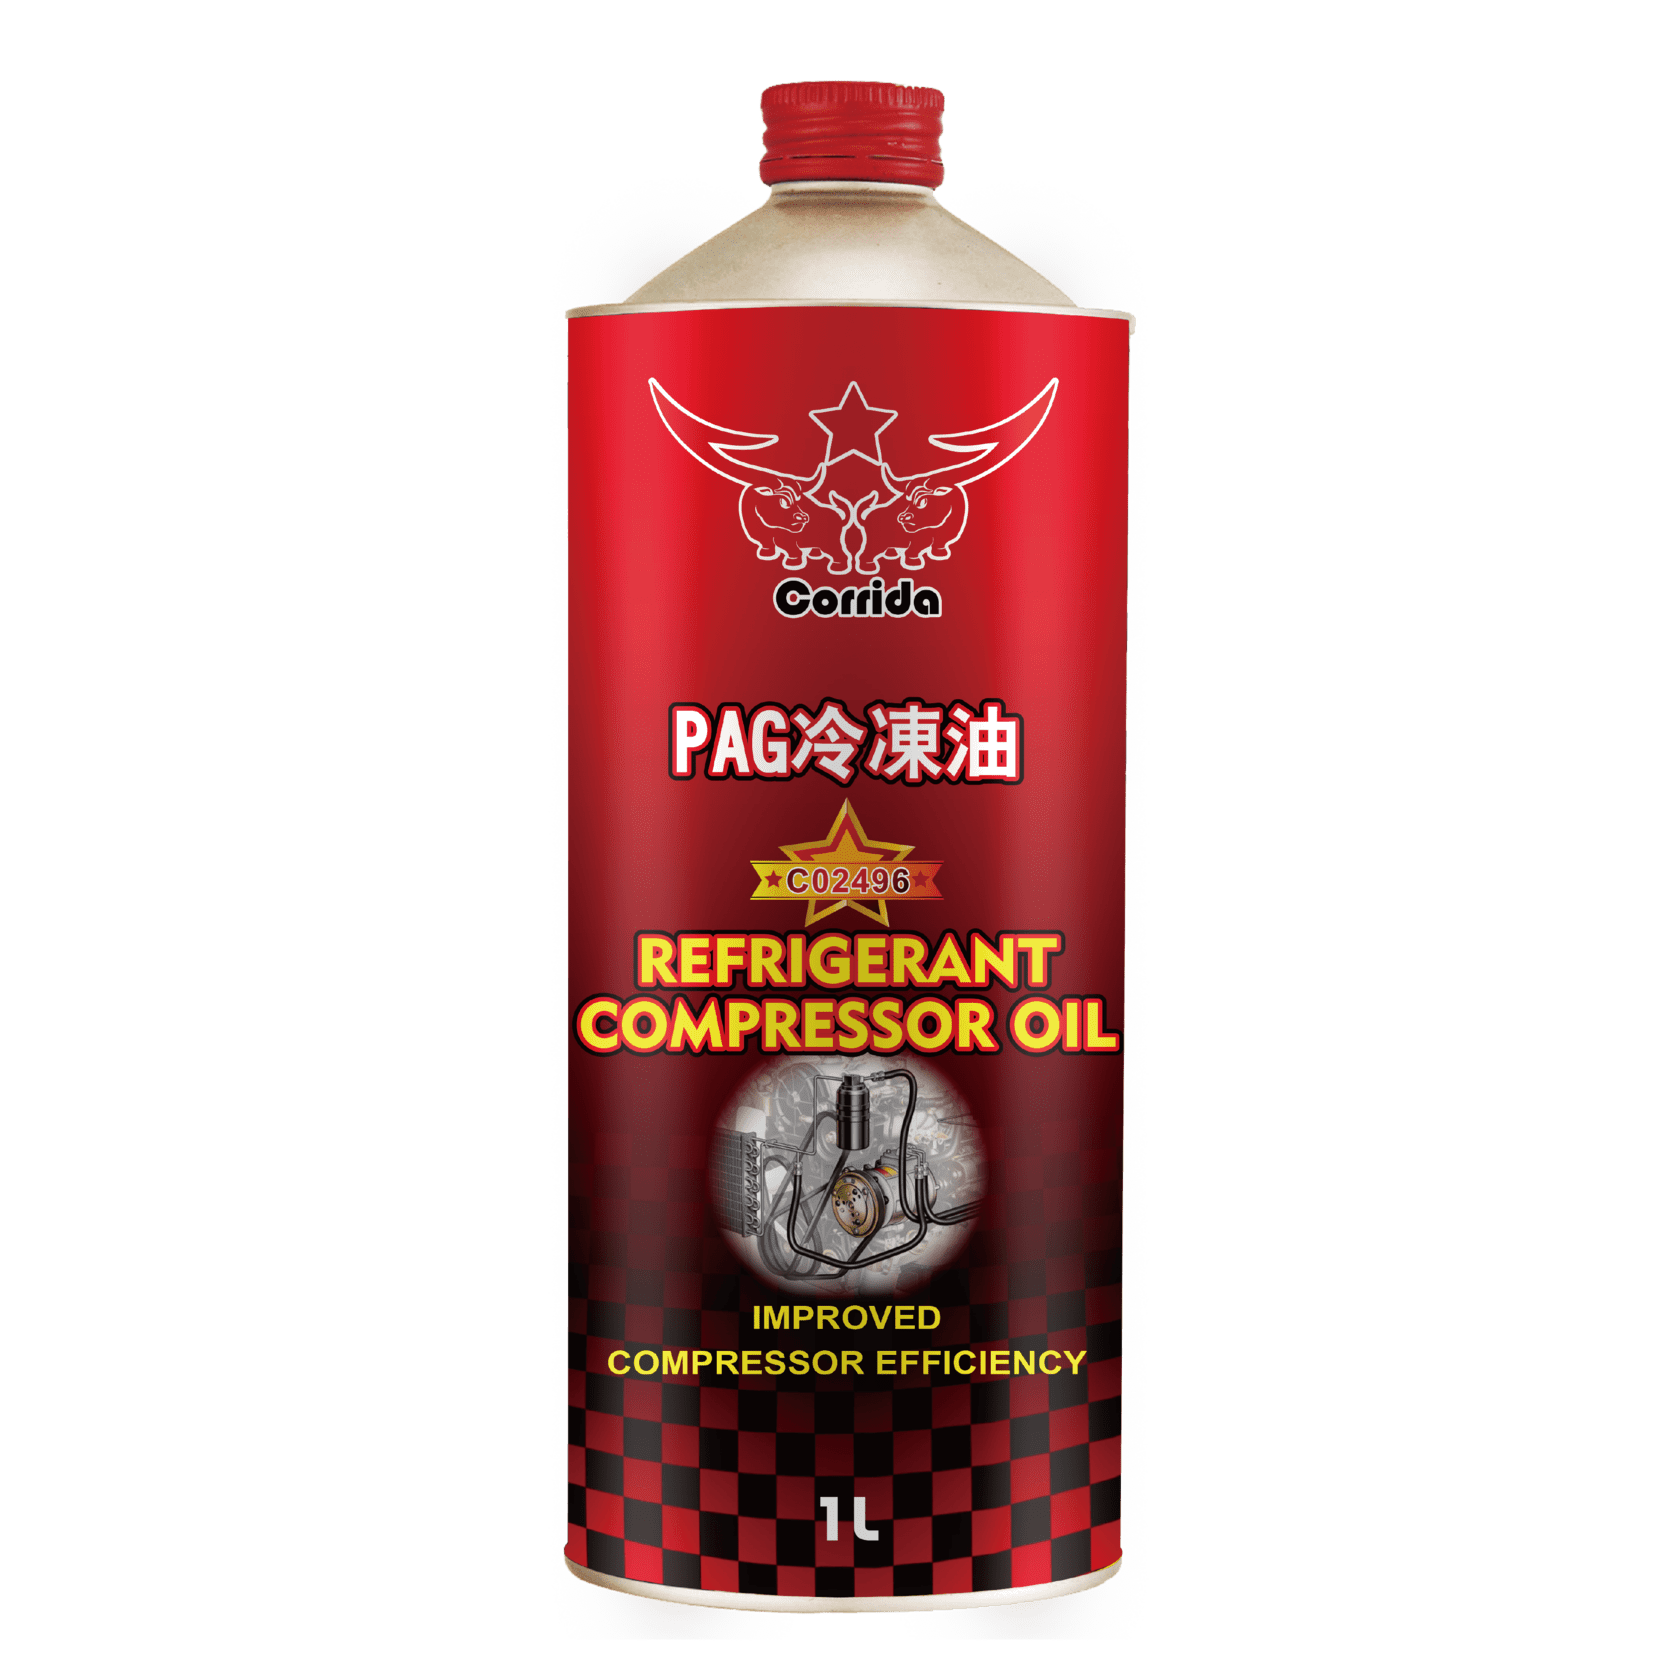 C02496 REFRIGERANT COMPRESSOR OIL